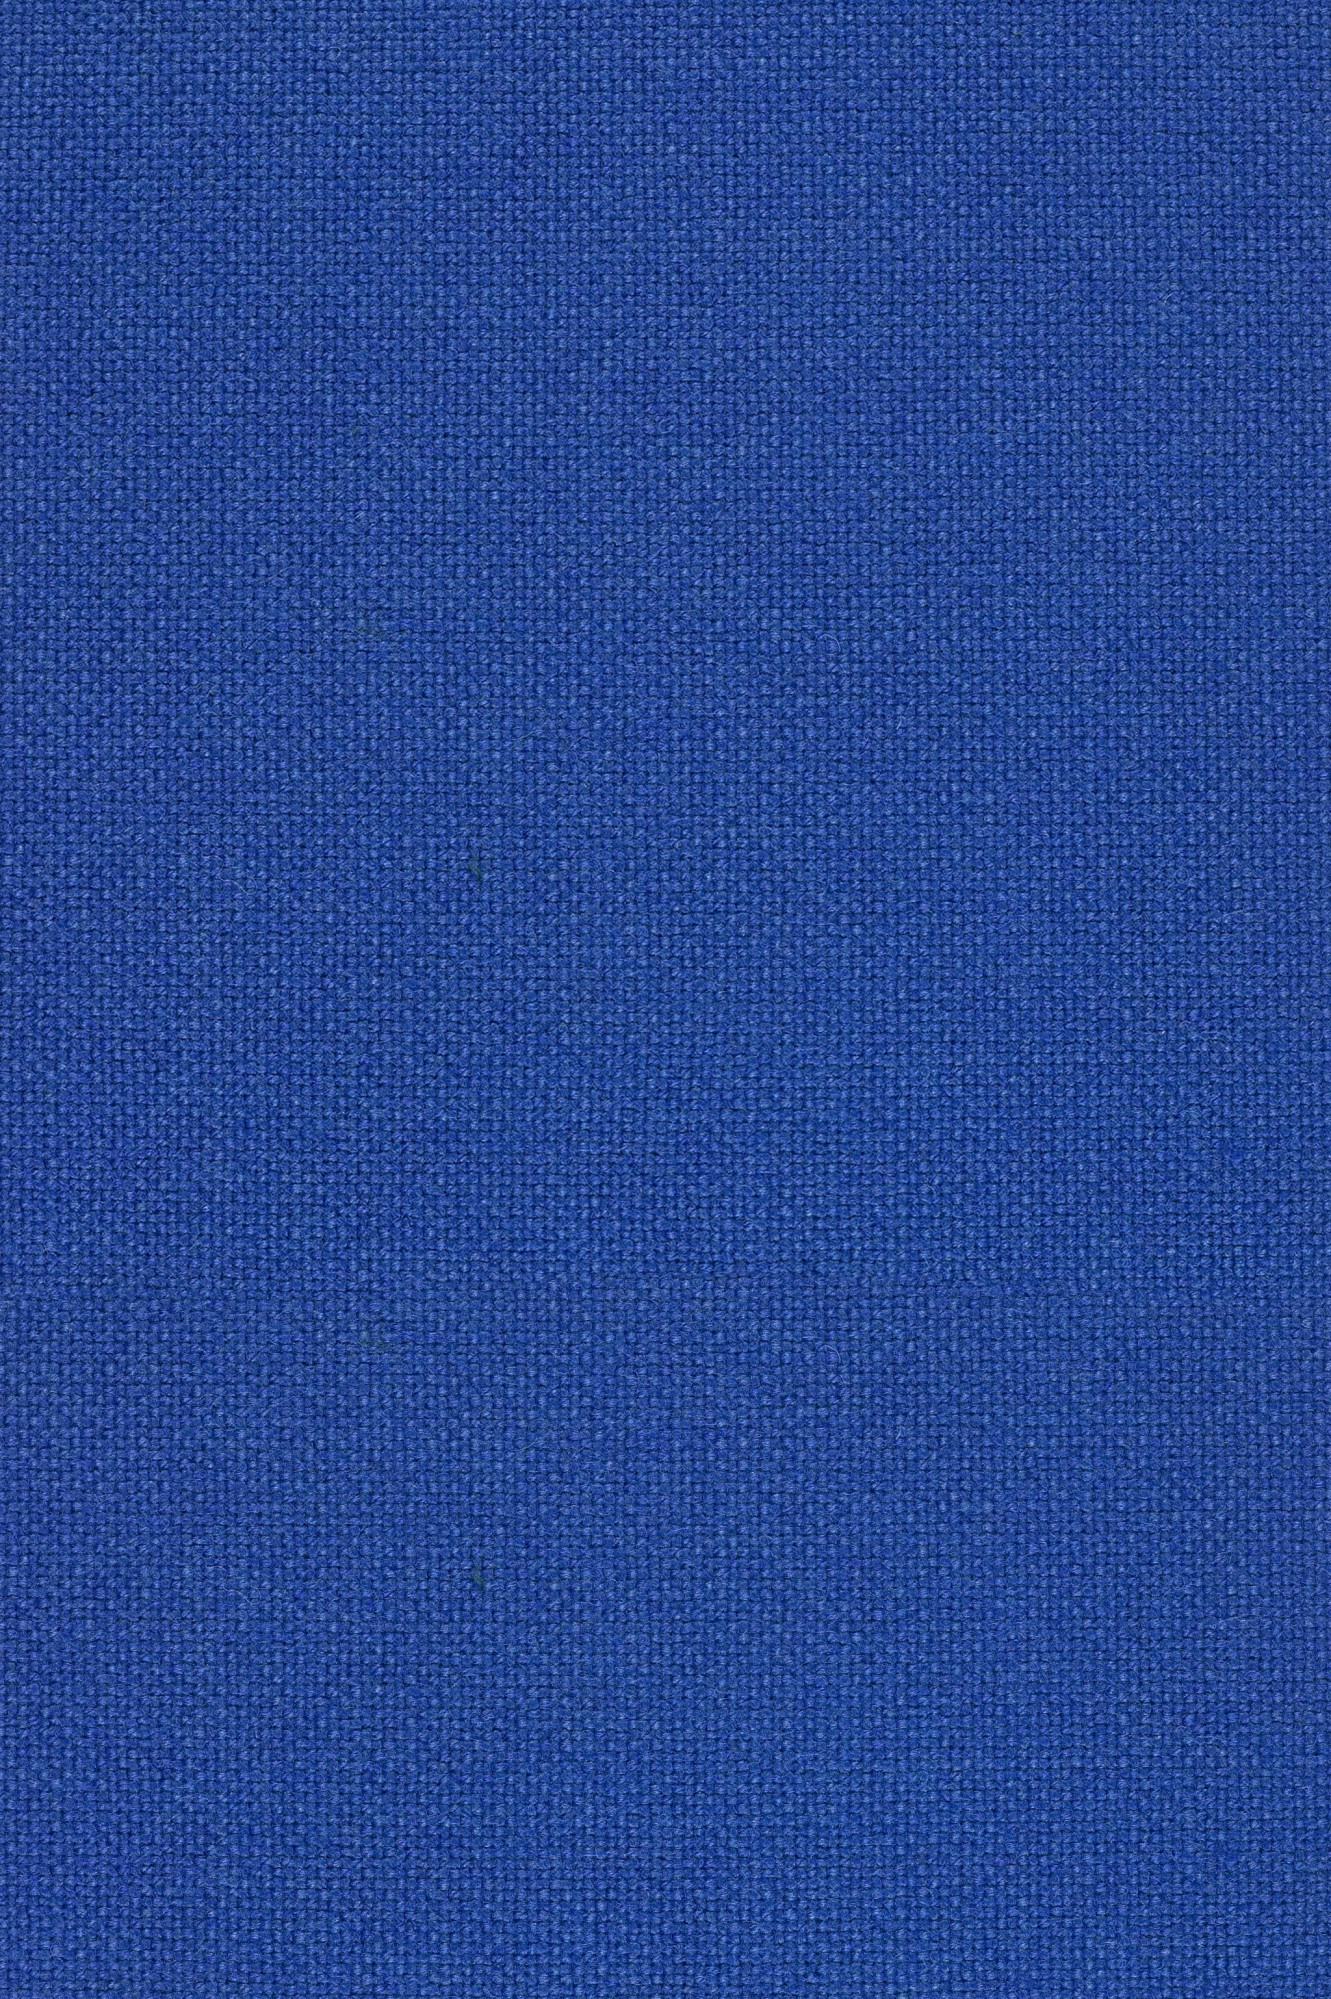 Fabric sample Hallingdal 65 750 blue